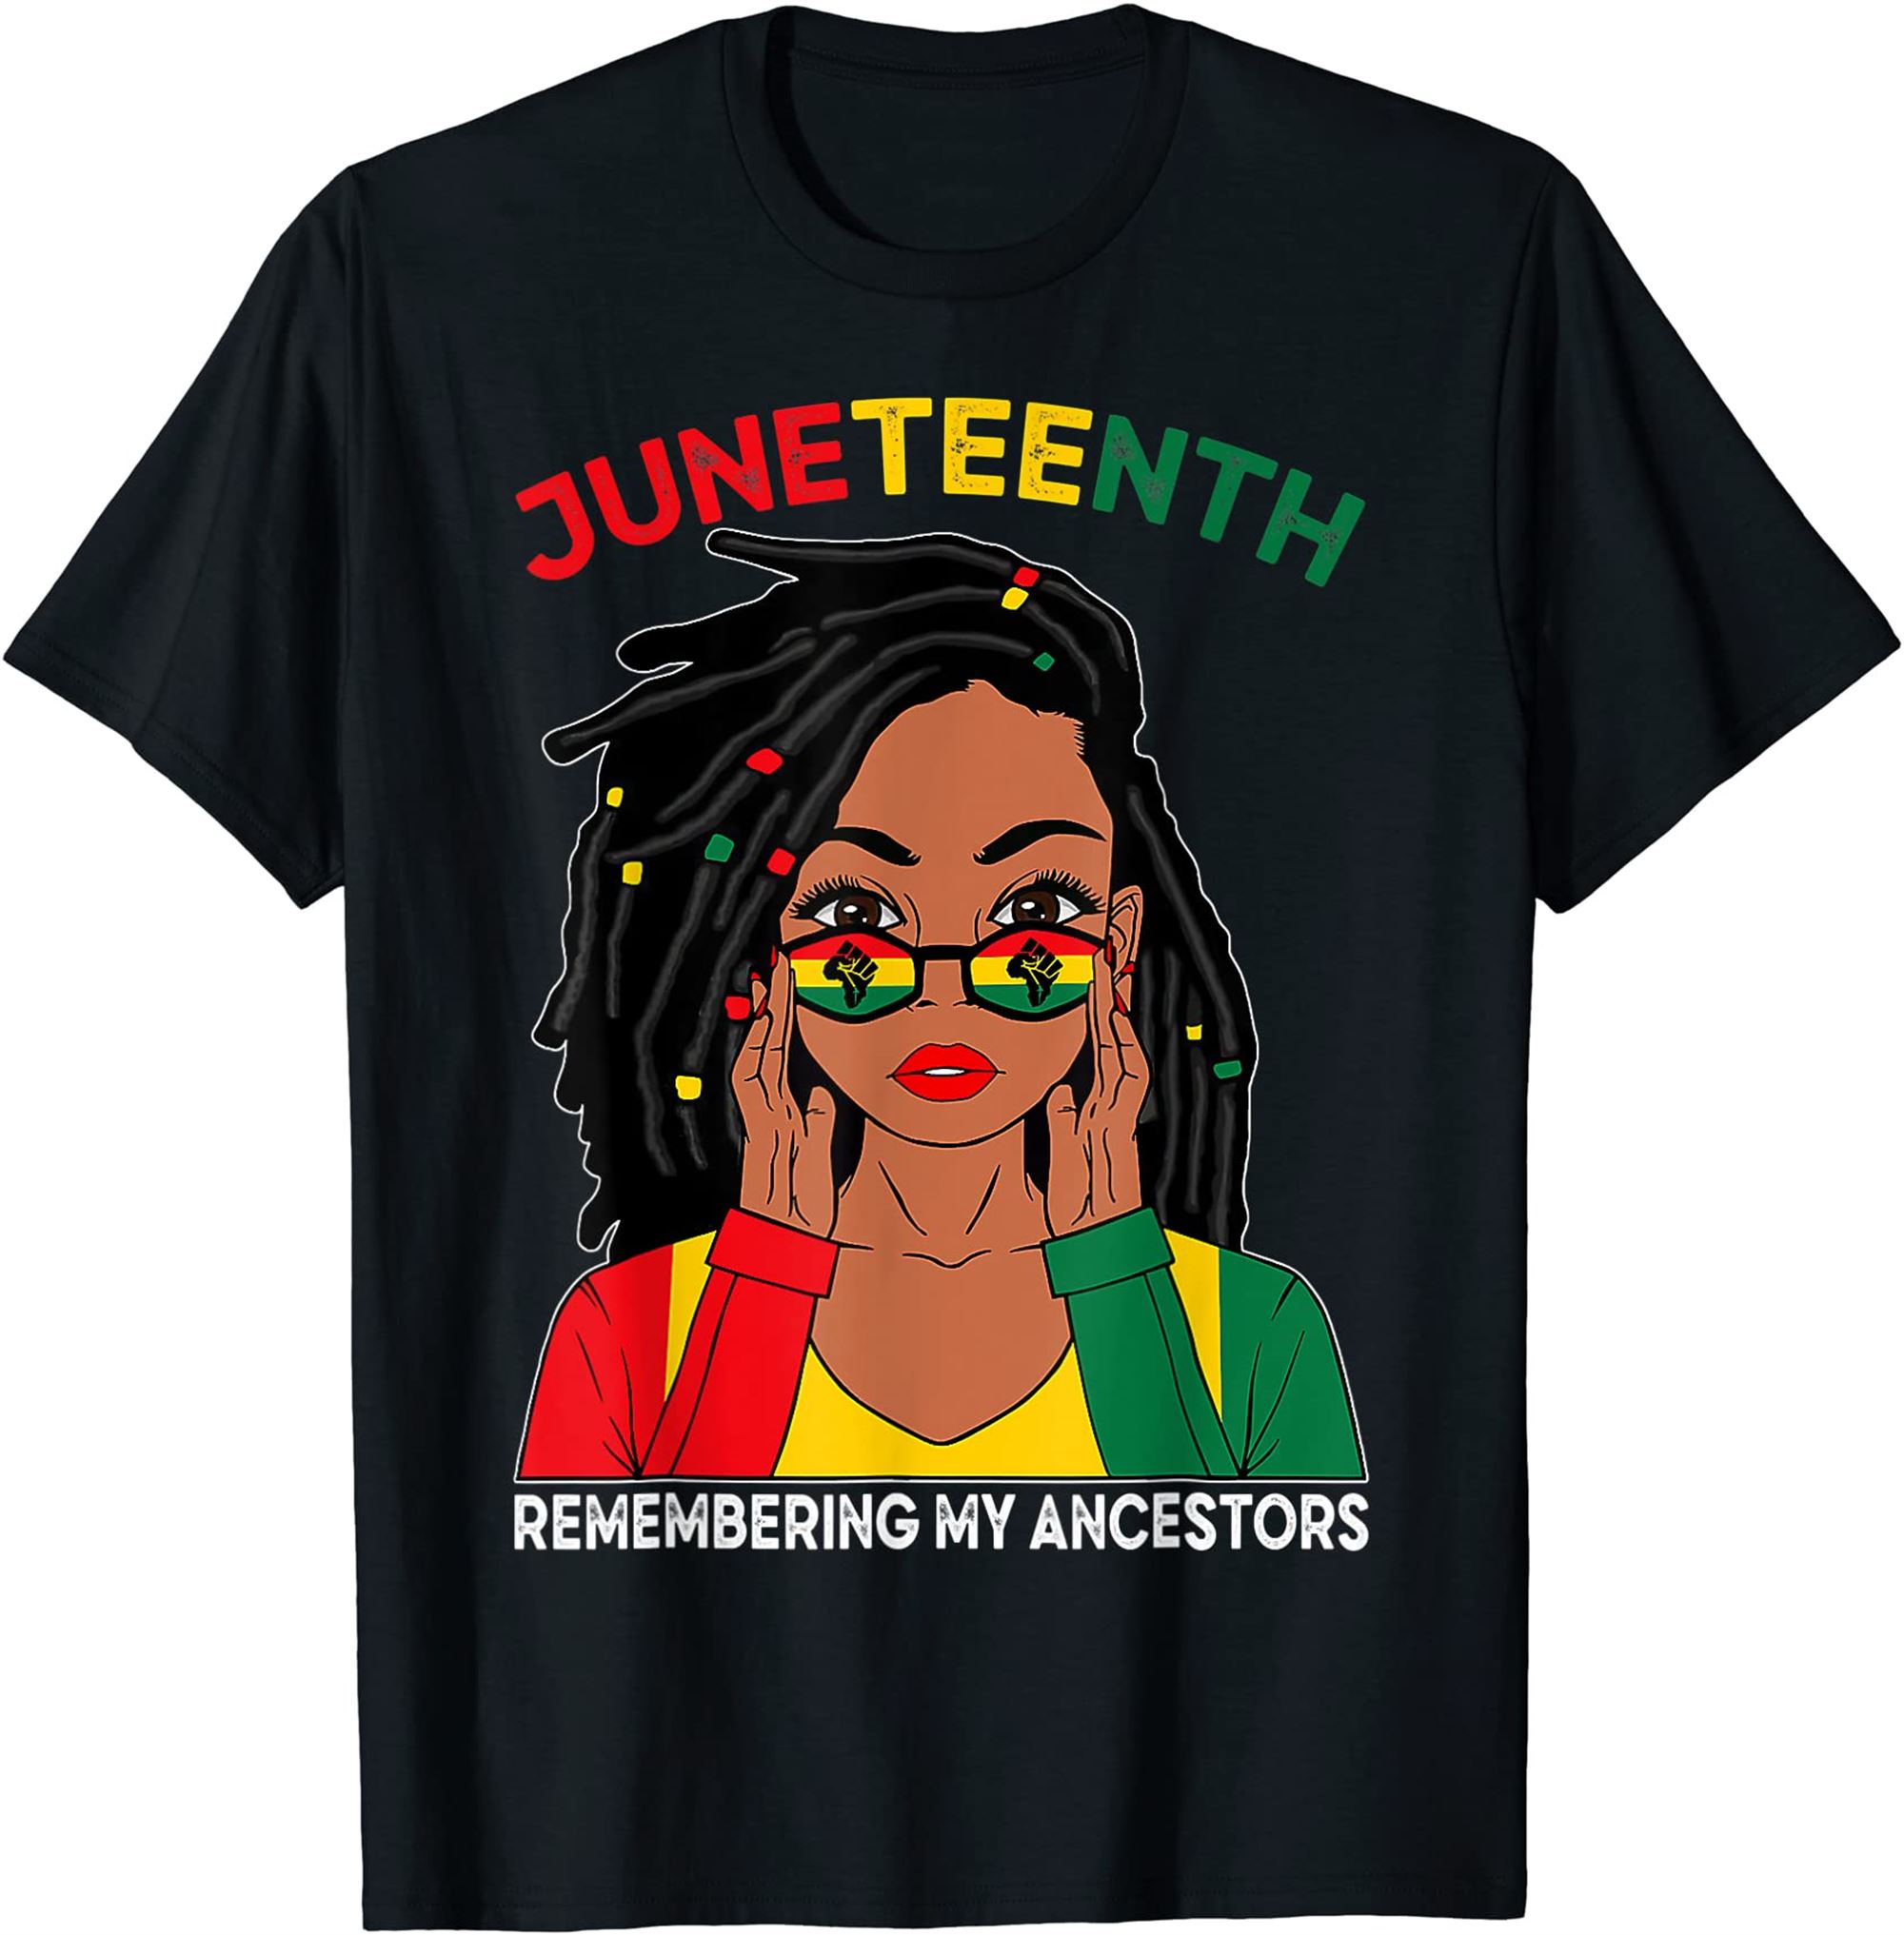 Locd Hair Black Woman Remebering My Ancestors Juneteenth T-shirt Plus Size Up To 5xl